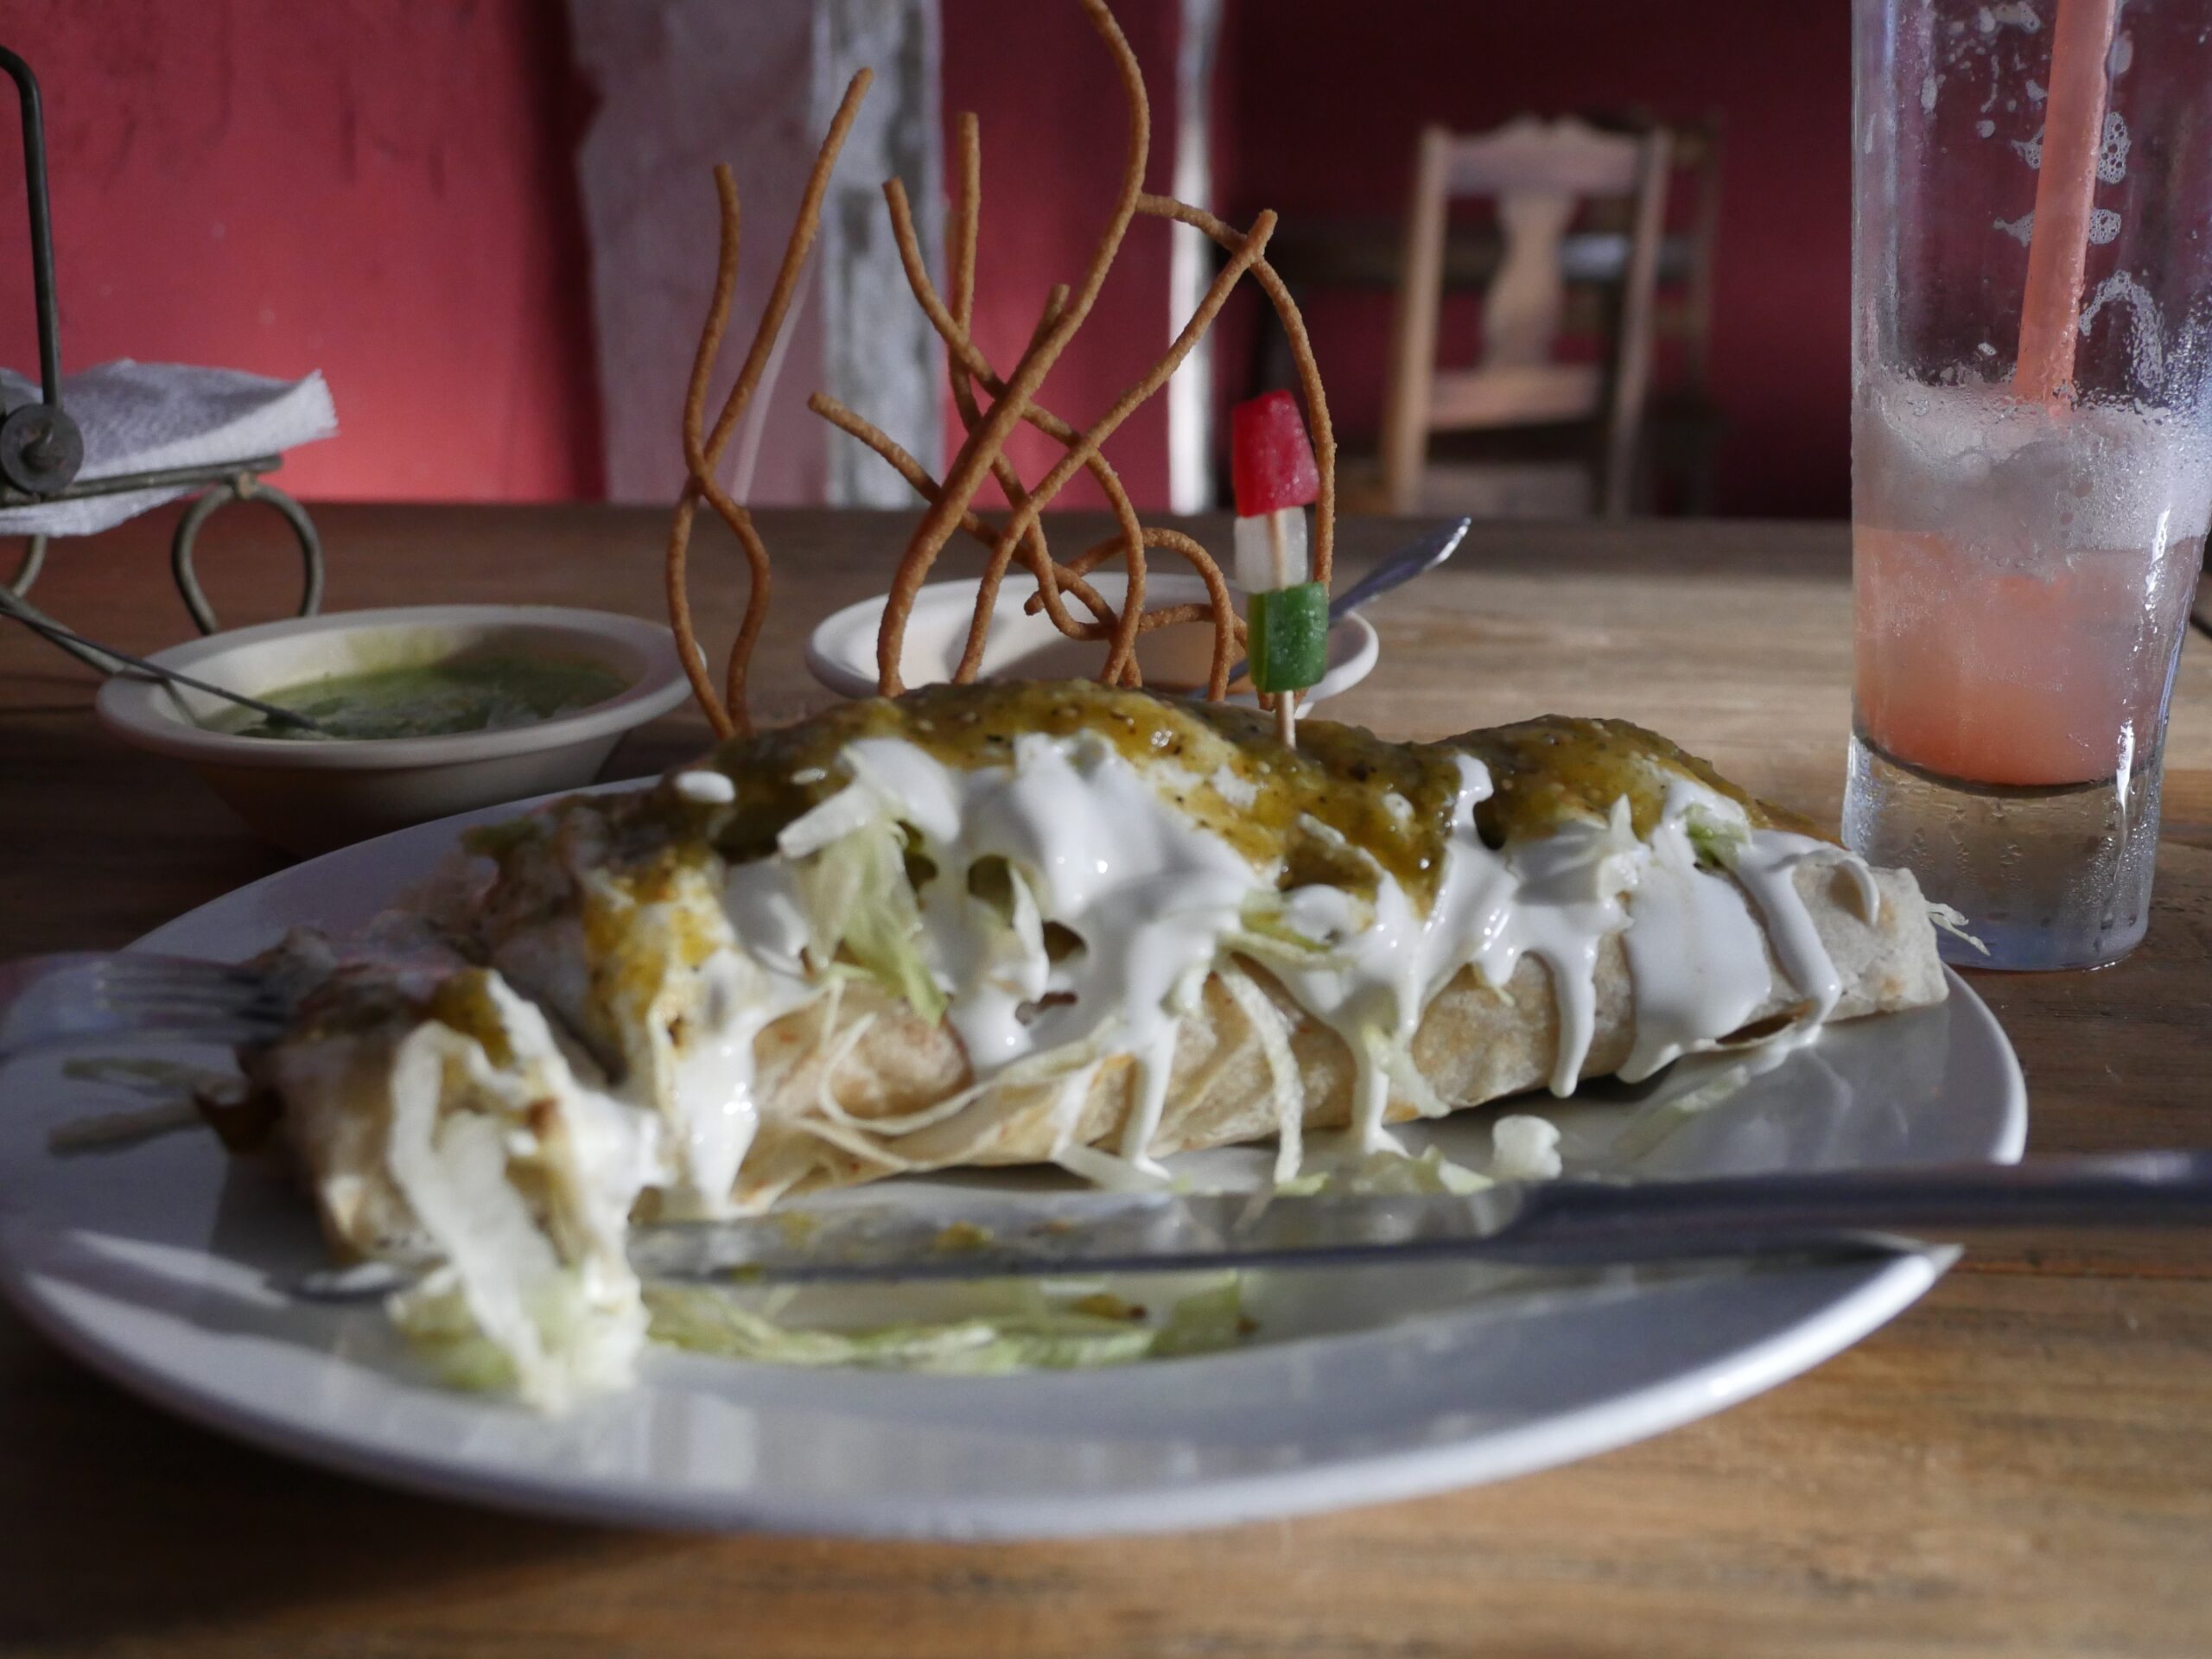 The Conato 1910 restaurant in Valladolid, Mexico serves excellent burritos.